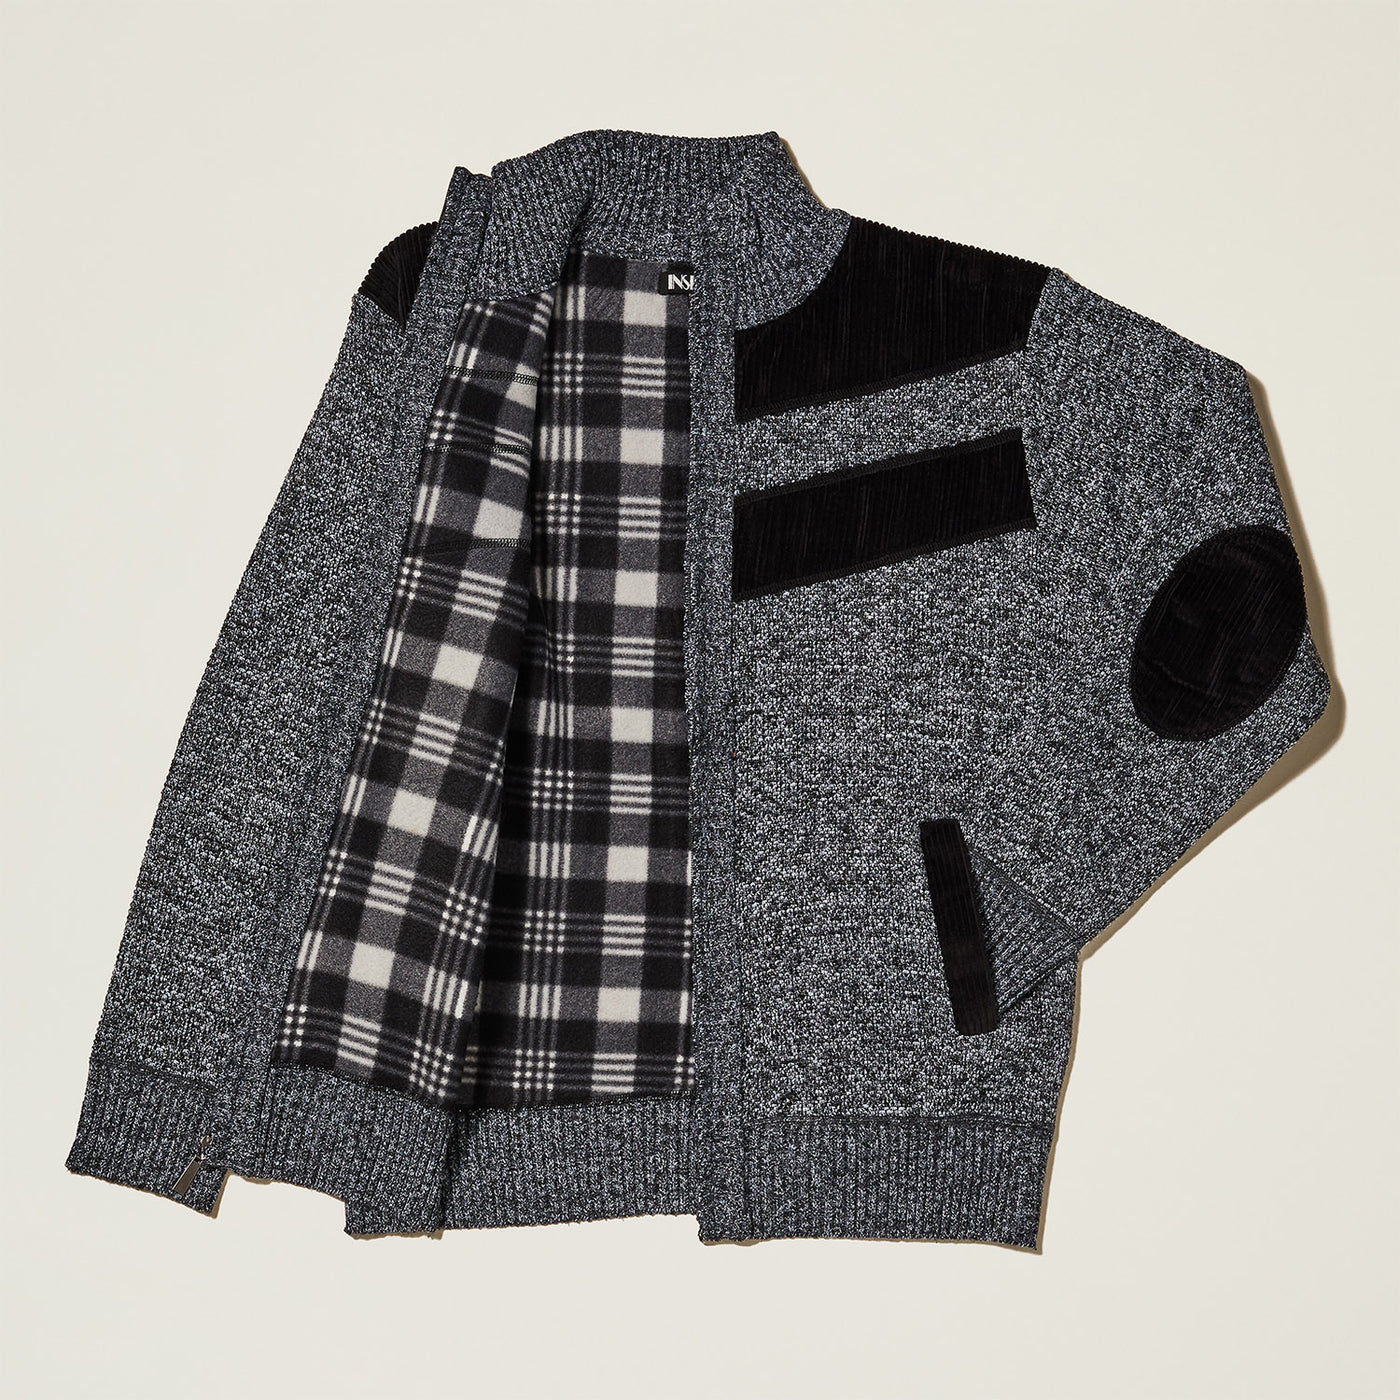 Marled Yarn Full Zip Sweater with Corduroy Trim - INSERCH